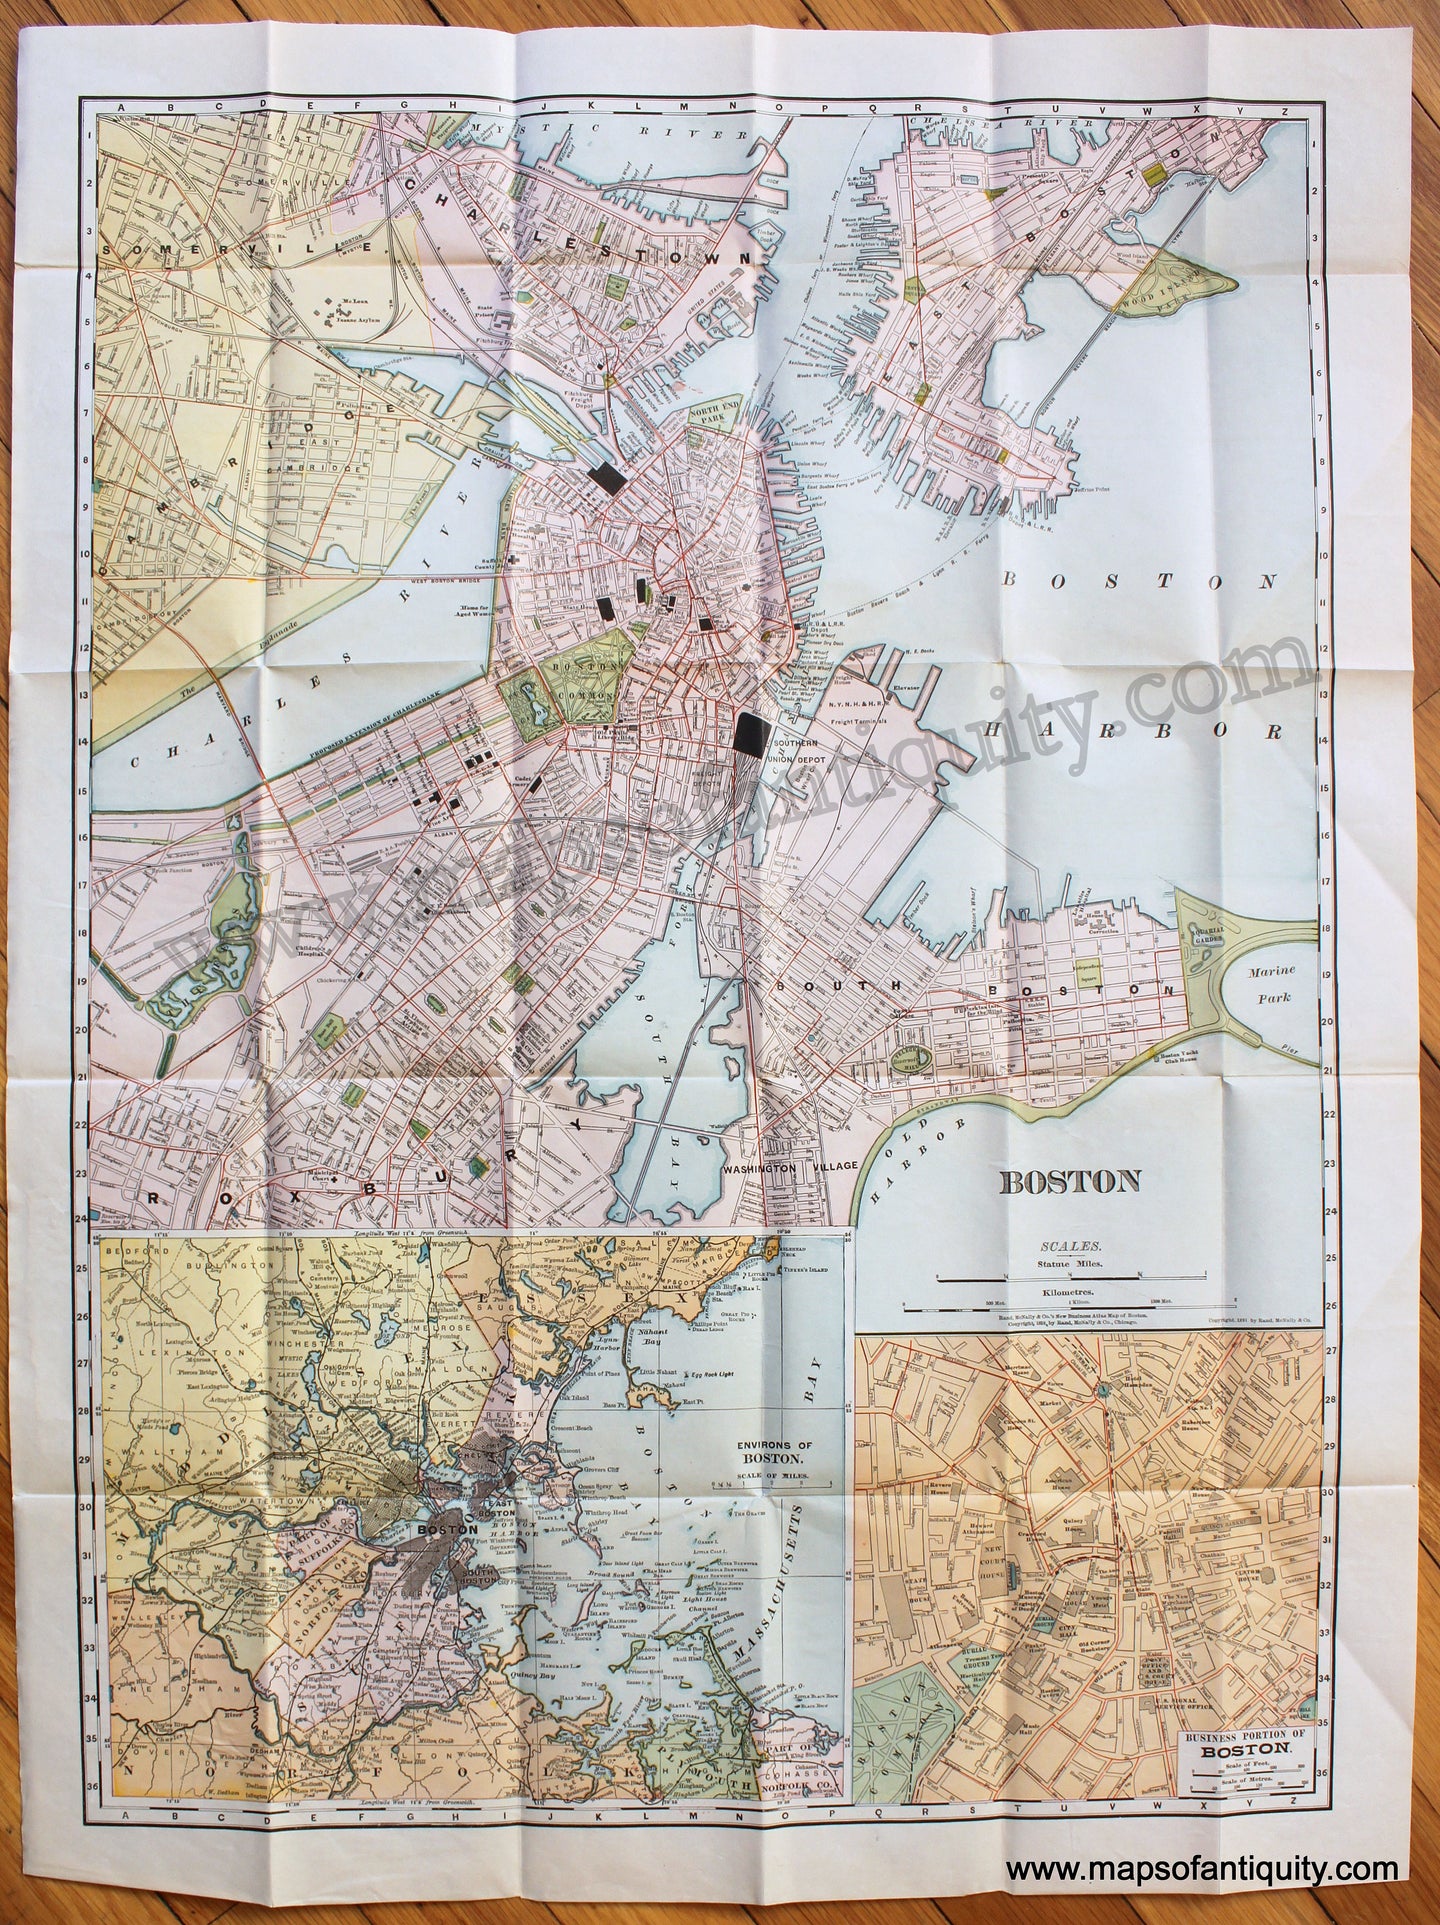 Antique-Printed-Color-Folding-City-Map-Boston-1898-Rand-McNally-Boston-Massachusetts-1800s-19th-century-Maps-of-Antiquity